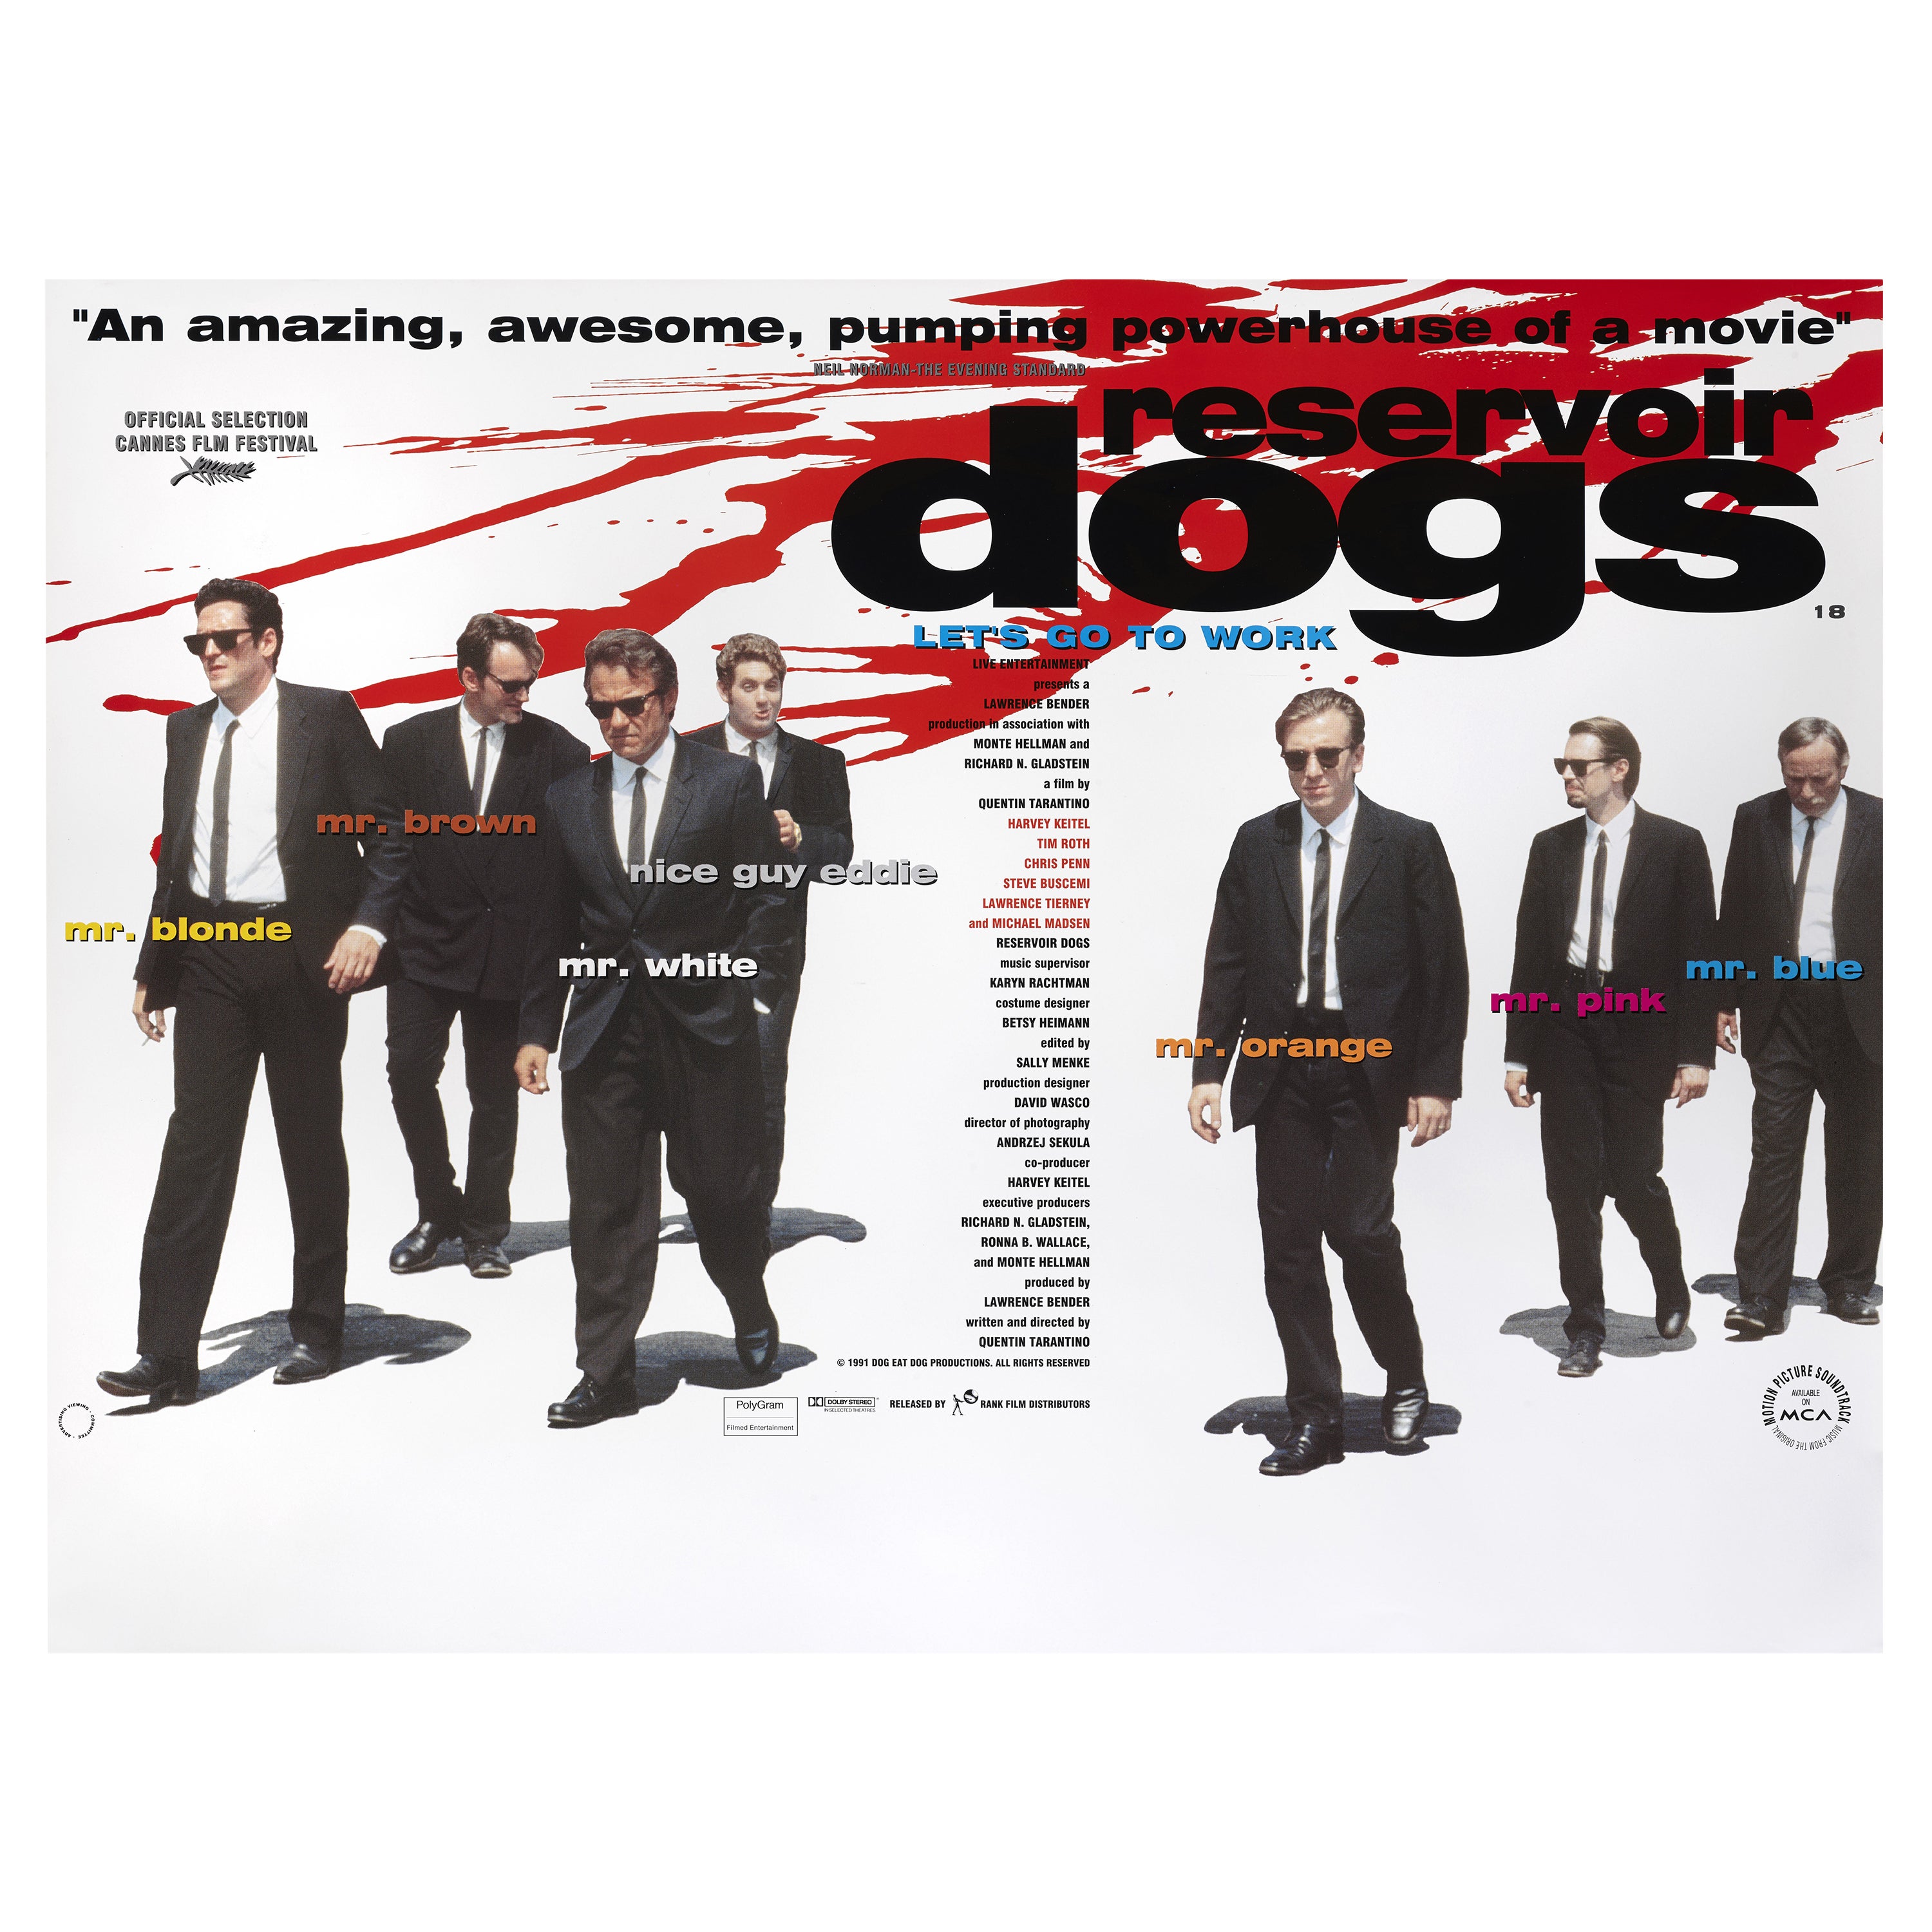 Reservoir Dogs For Sale